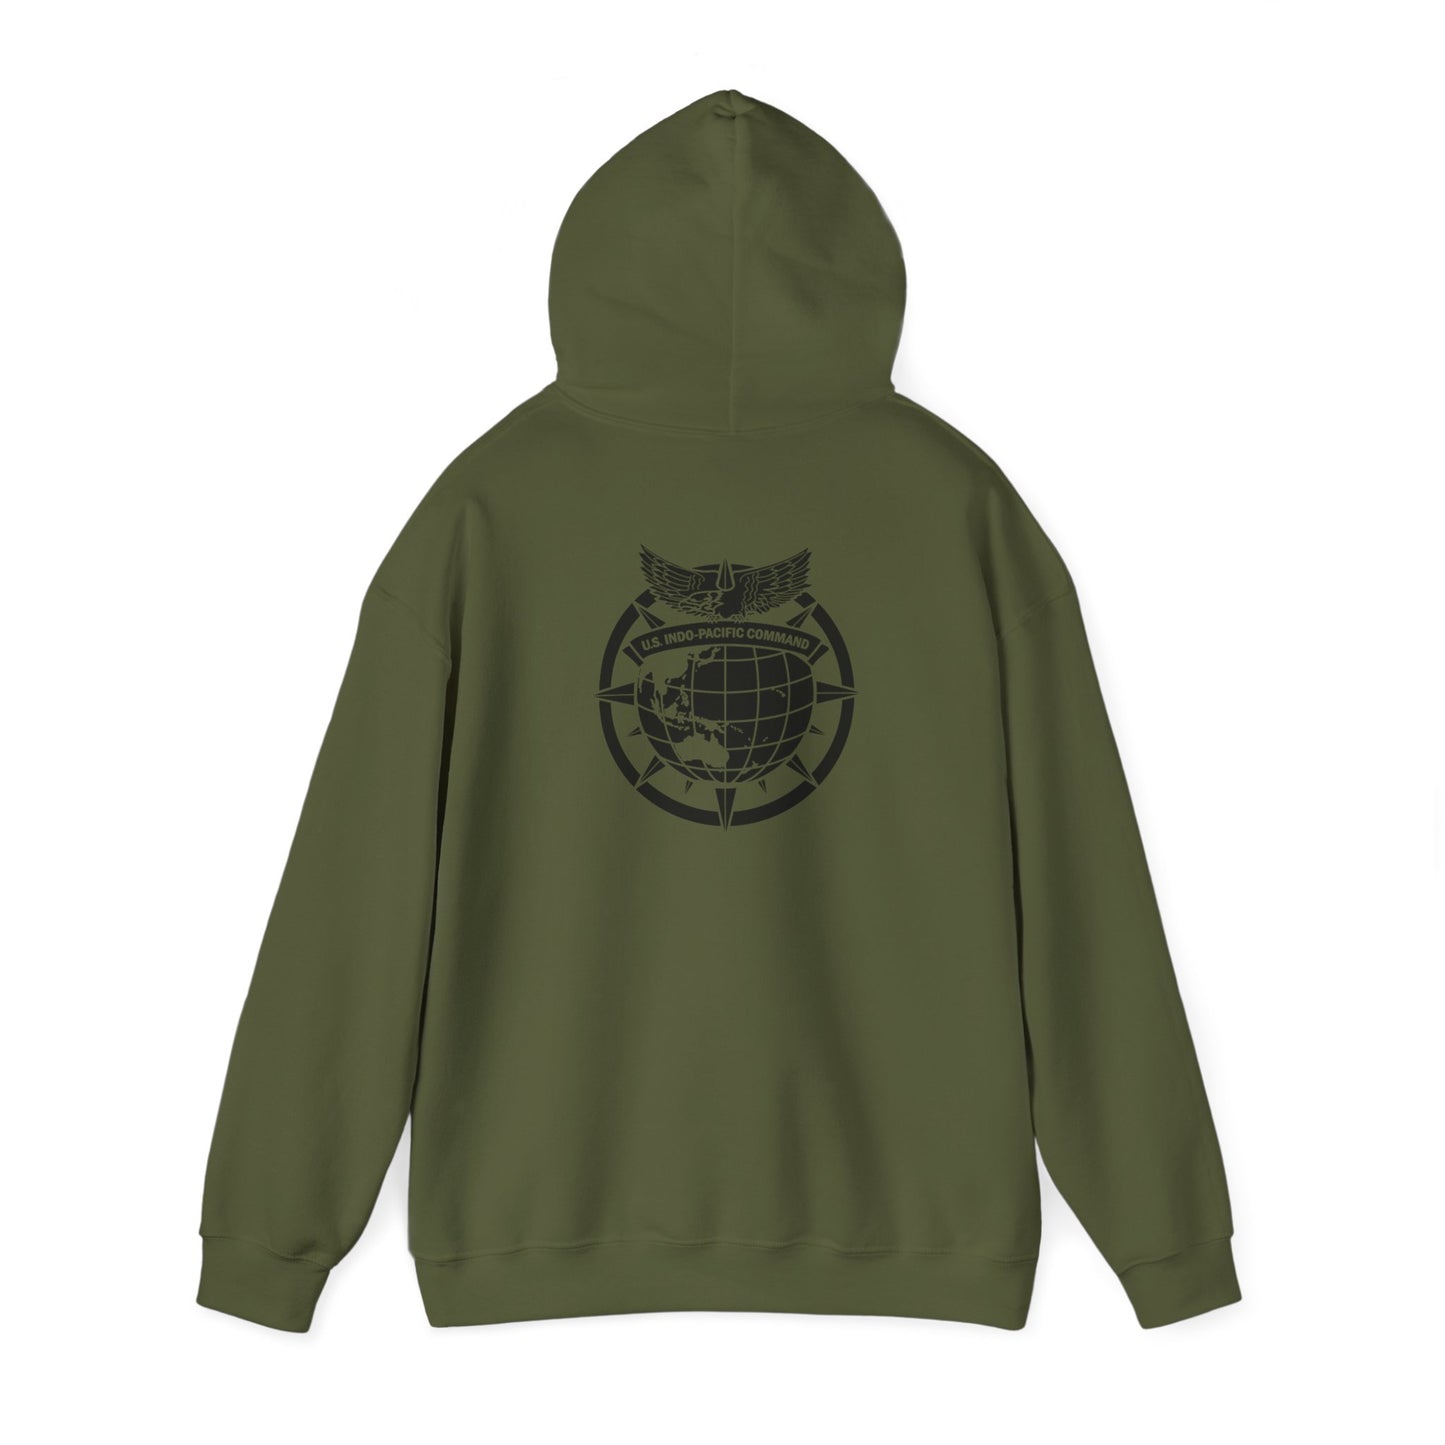 USINDOPACOM Army Element Subdued Hooded Sweatshirt